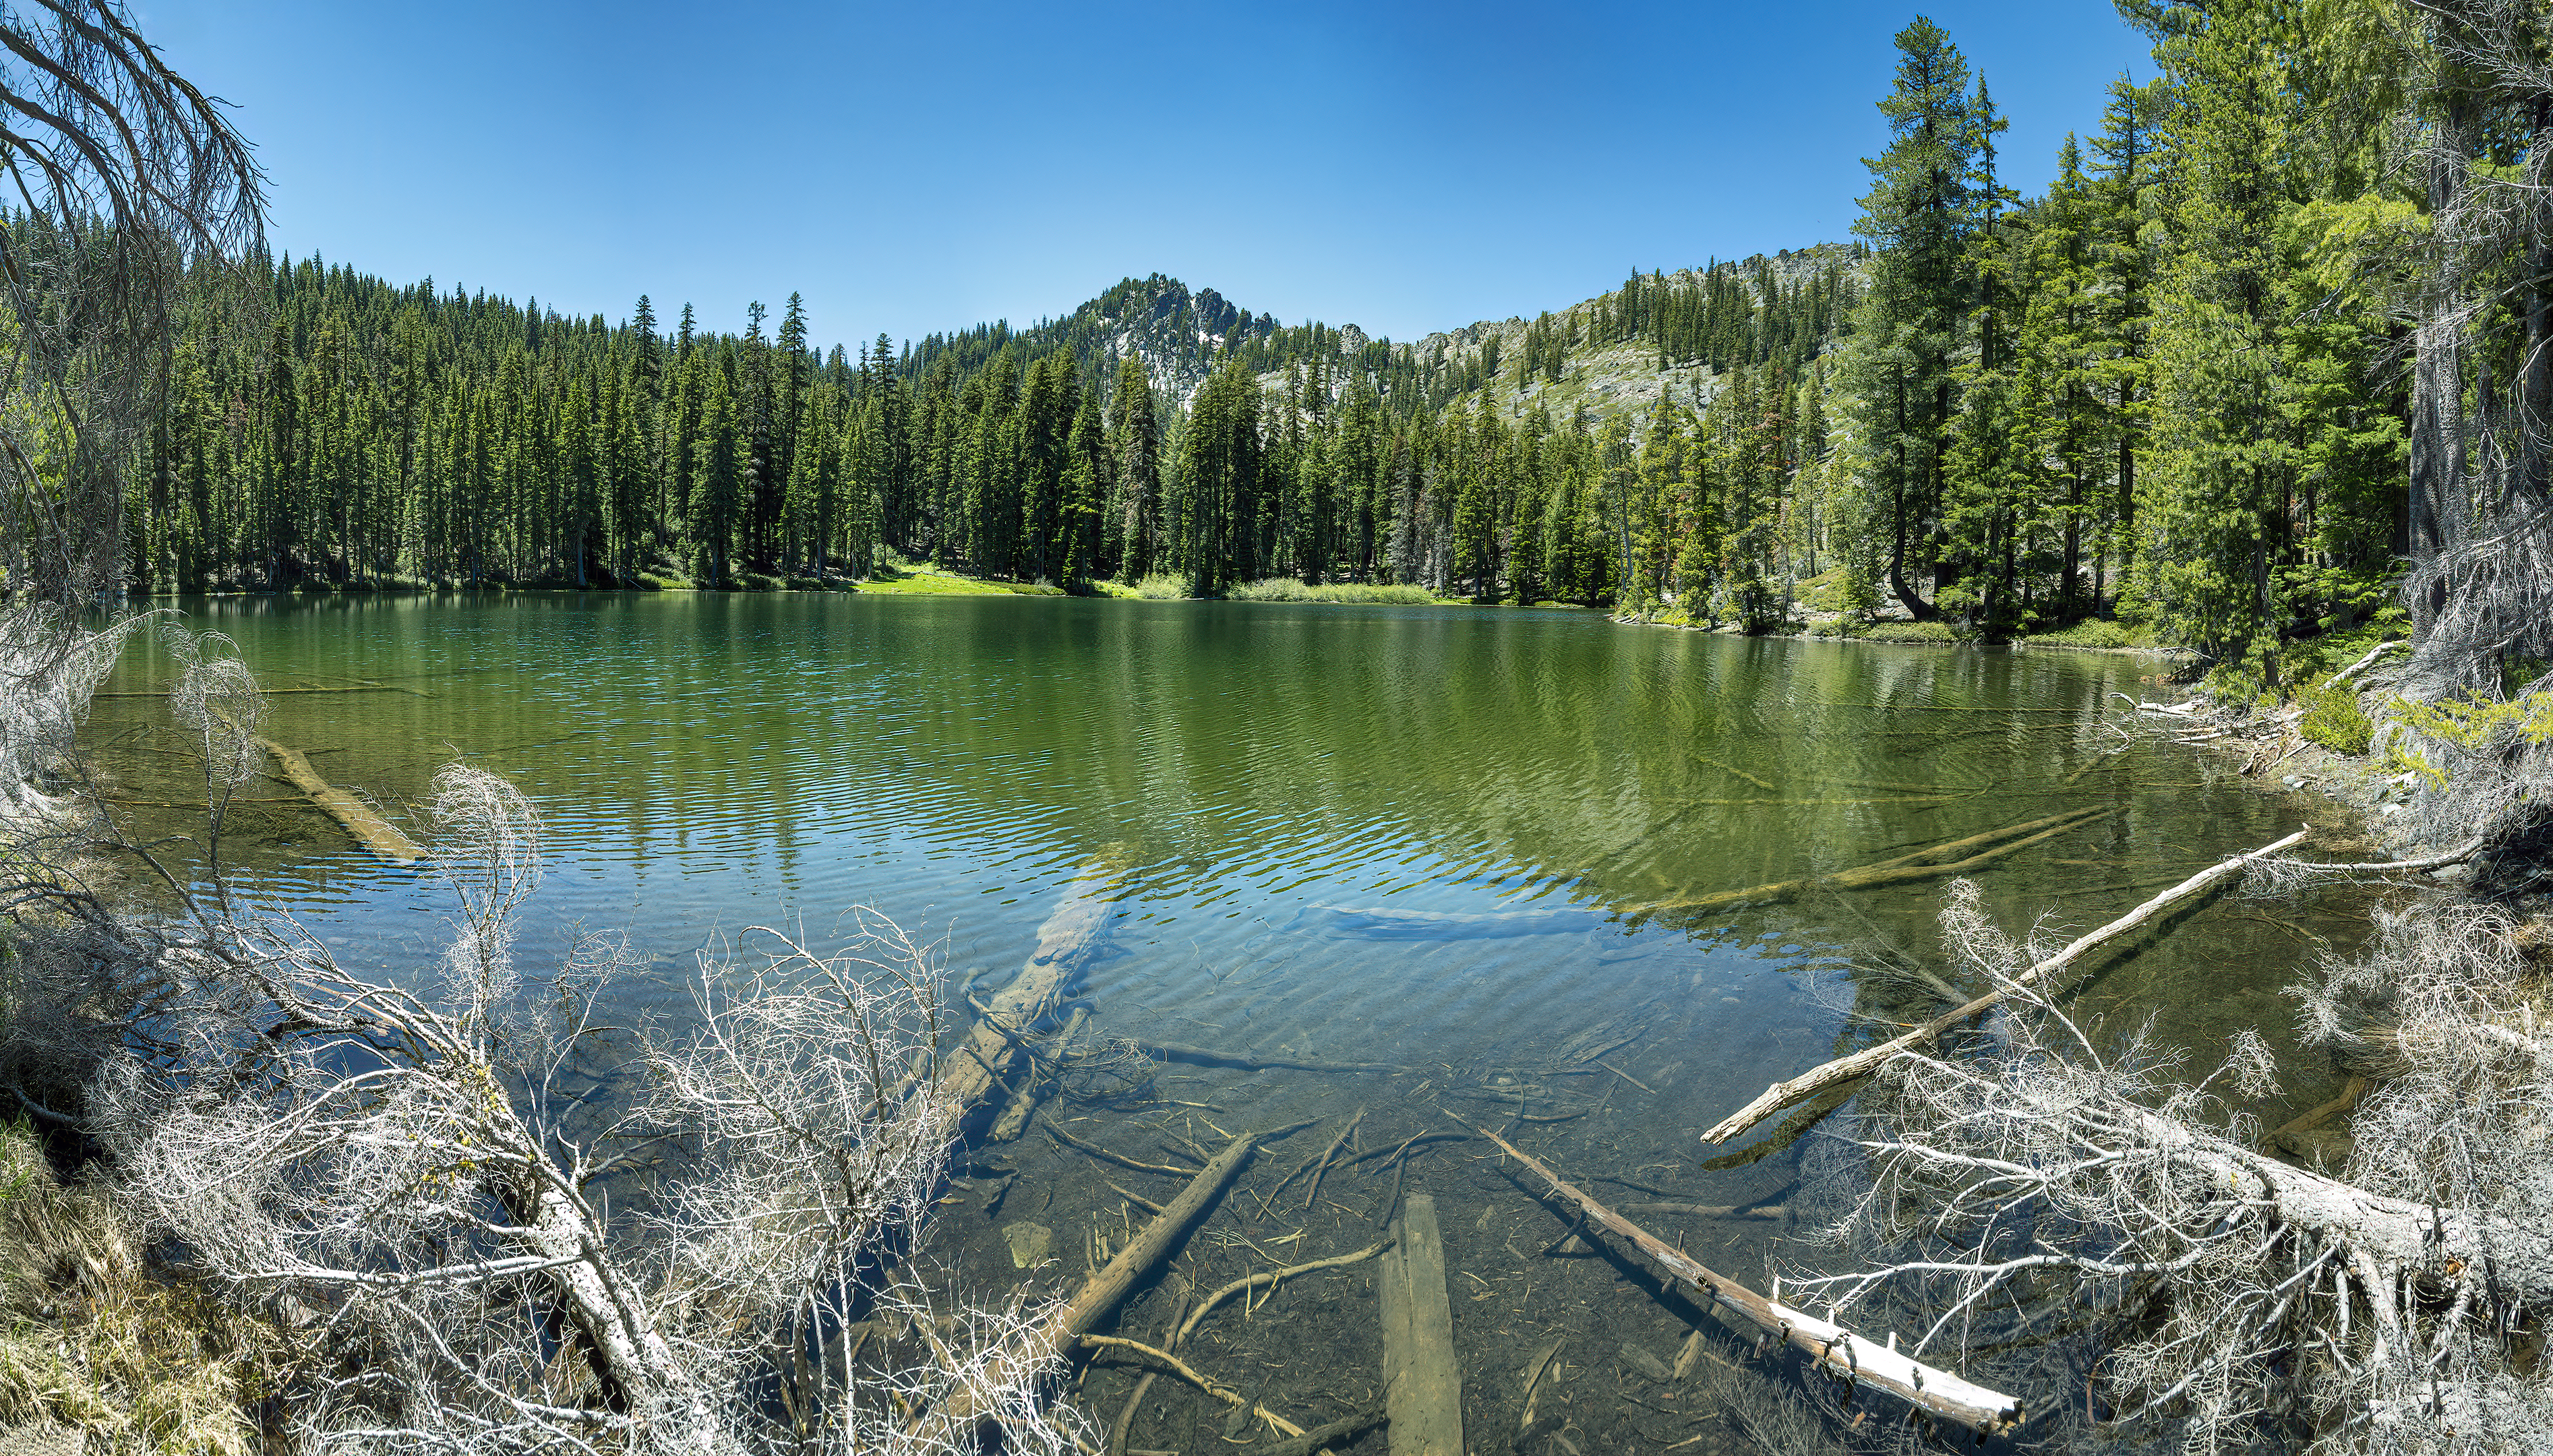 8-photo photomerge south fork lake california panorama topaz denoise ai-clear